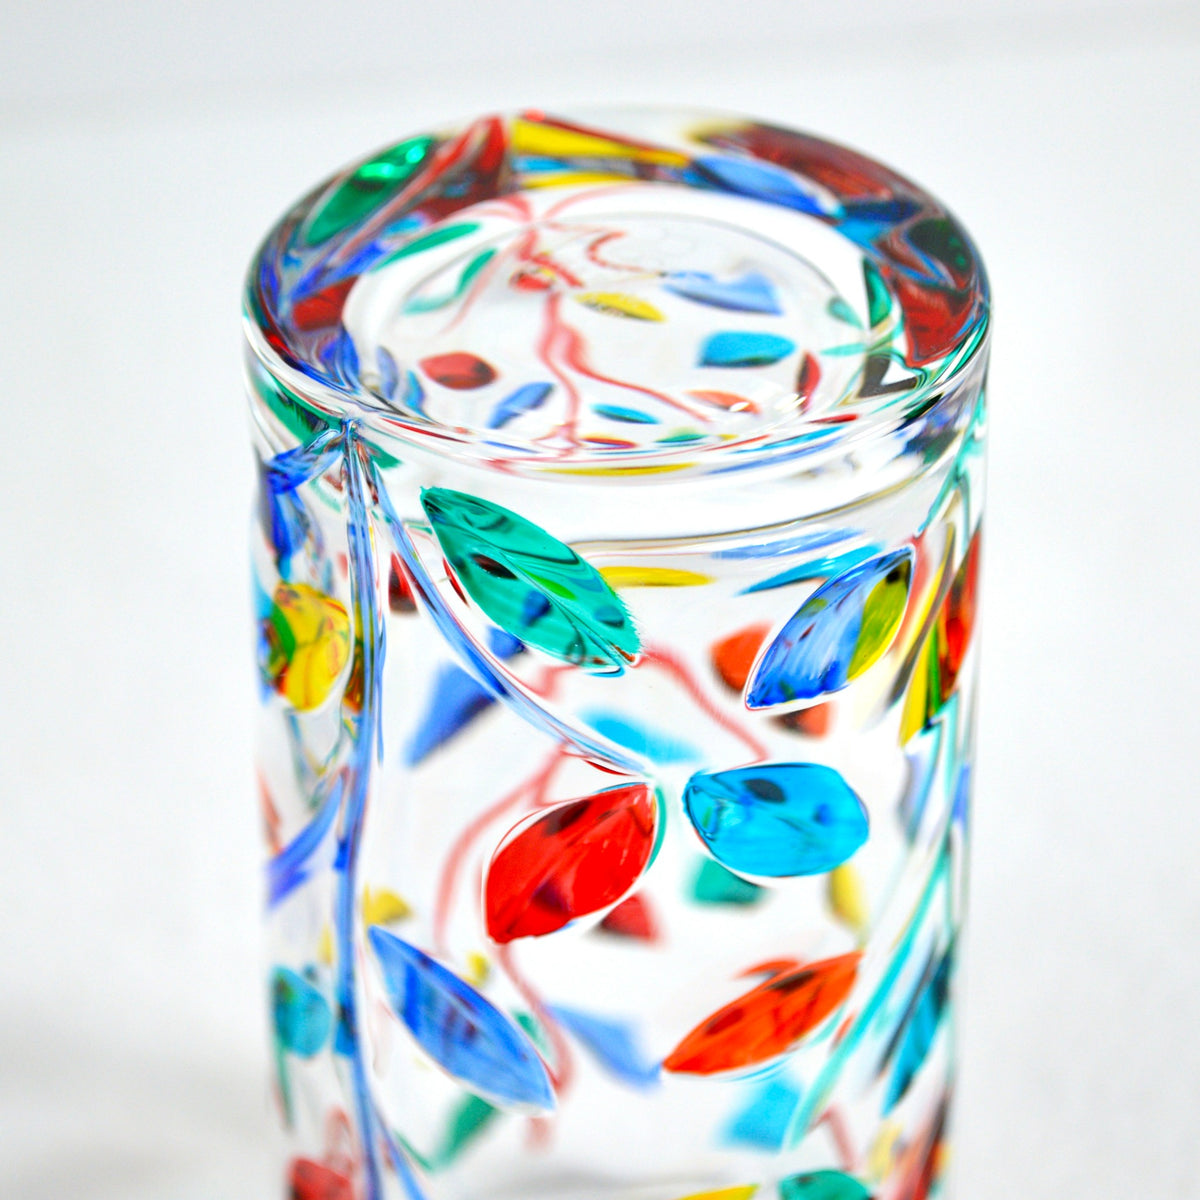 Flowervine Tall Drink Glasses, Set of 2, Hand-Painted Italian Crystal - My Italian Decor